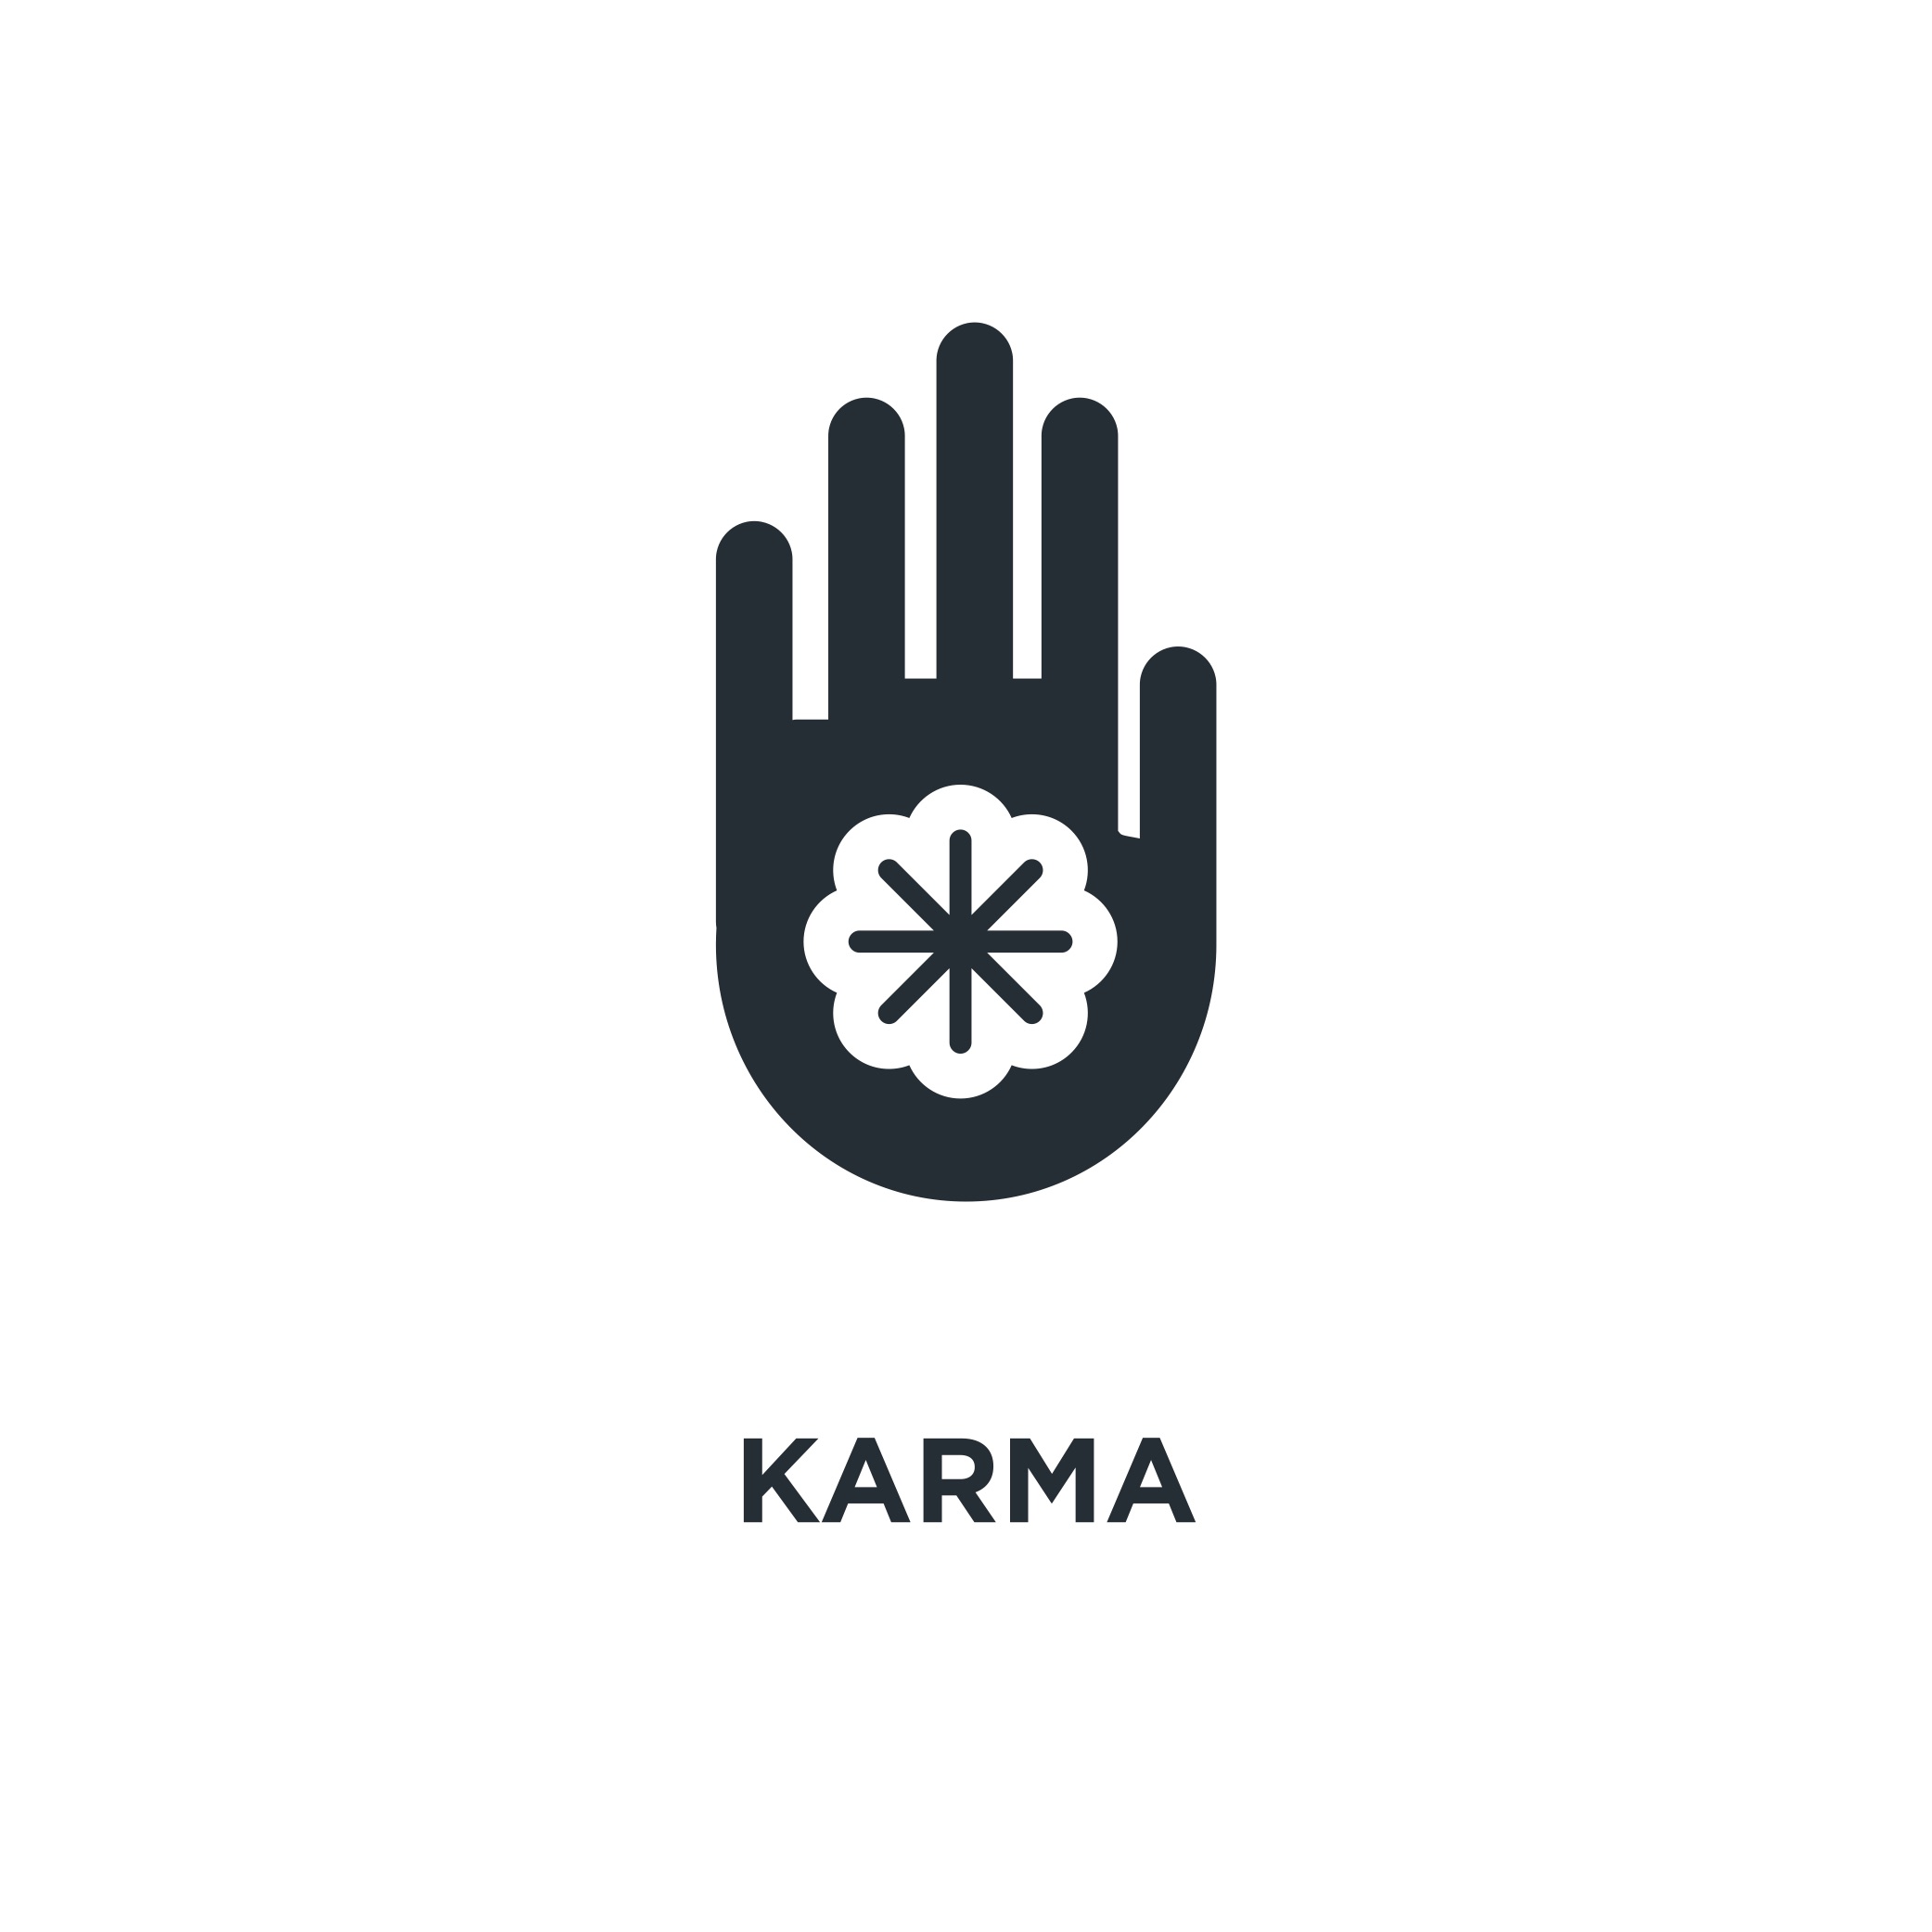 Un logo de karma. | Source : Shutterstock